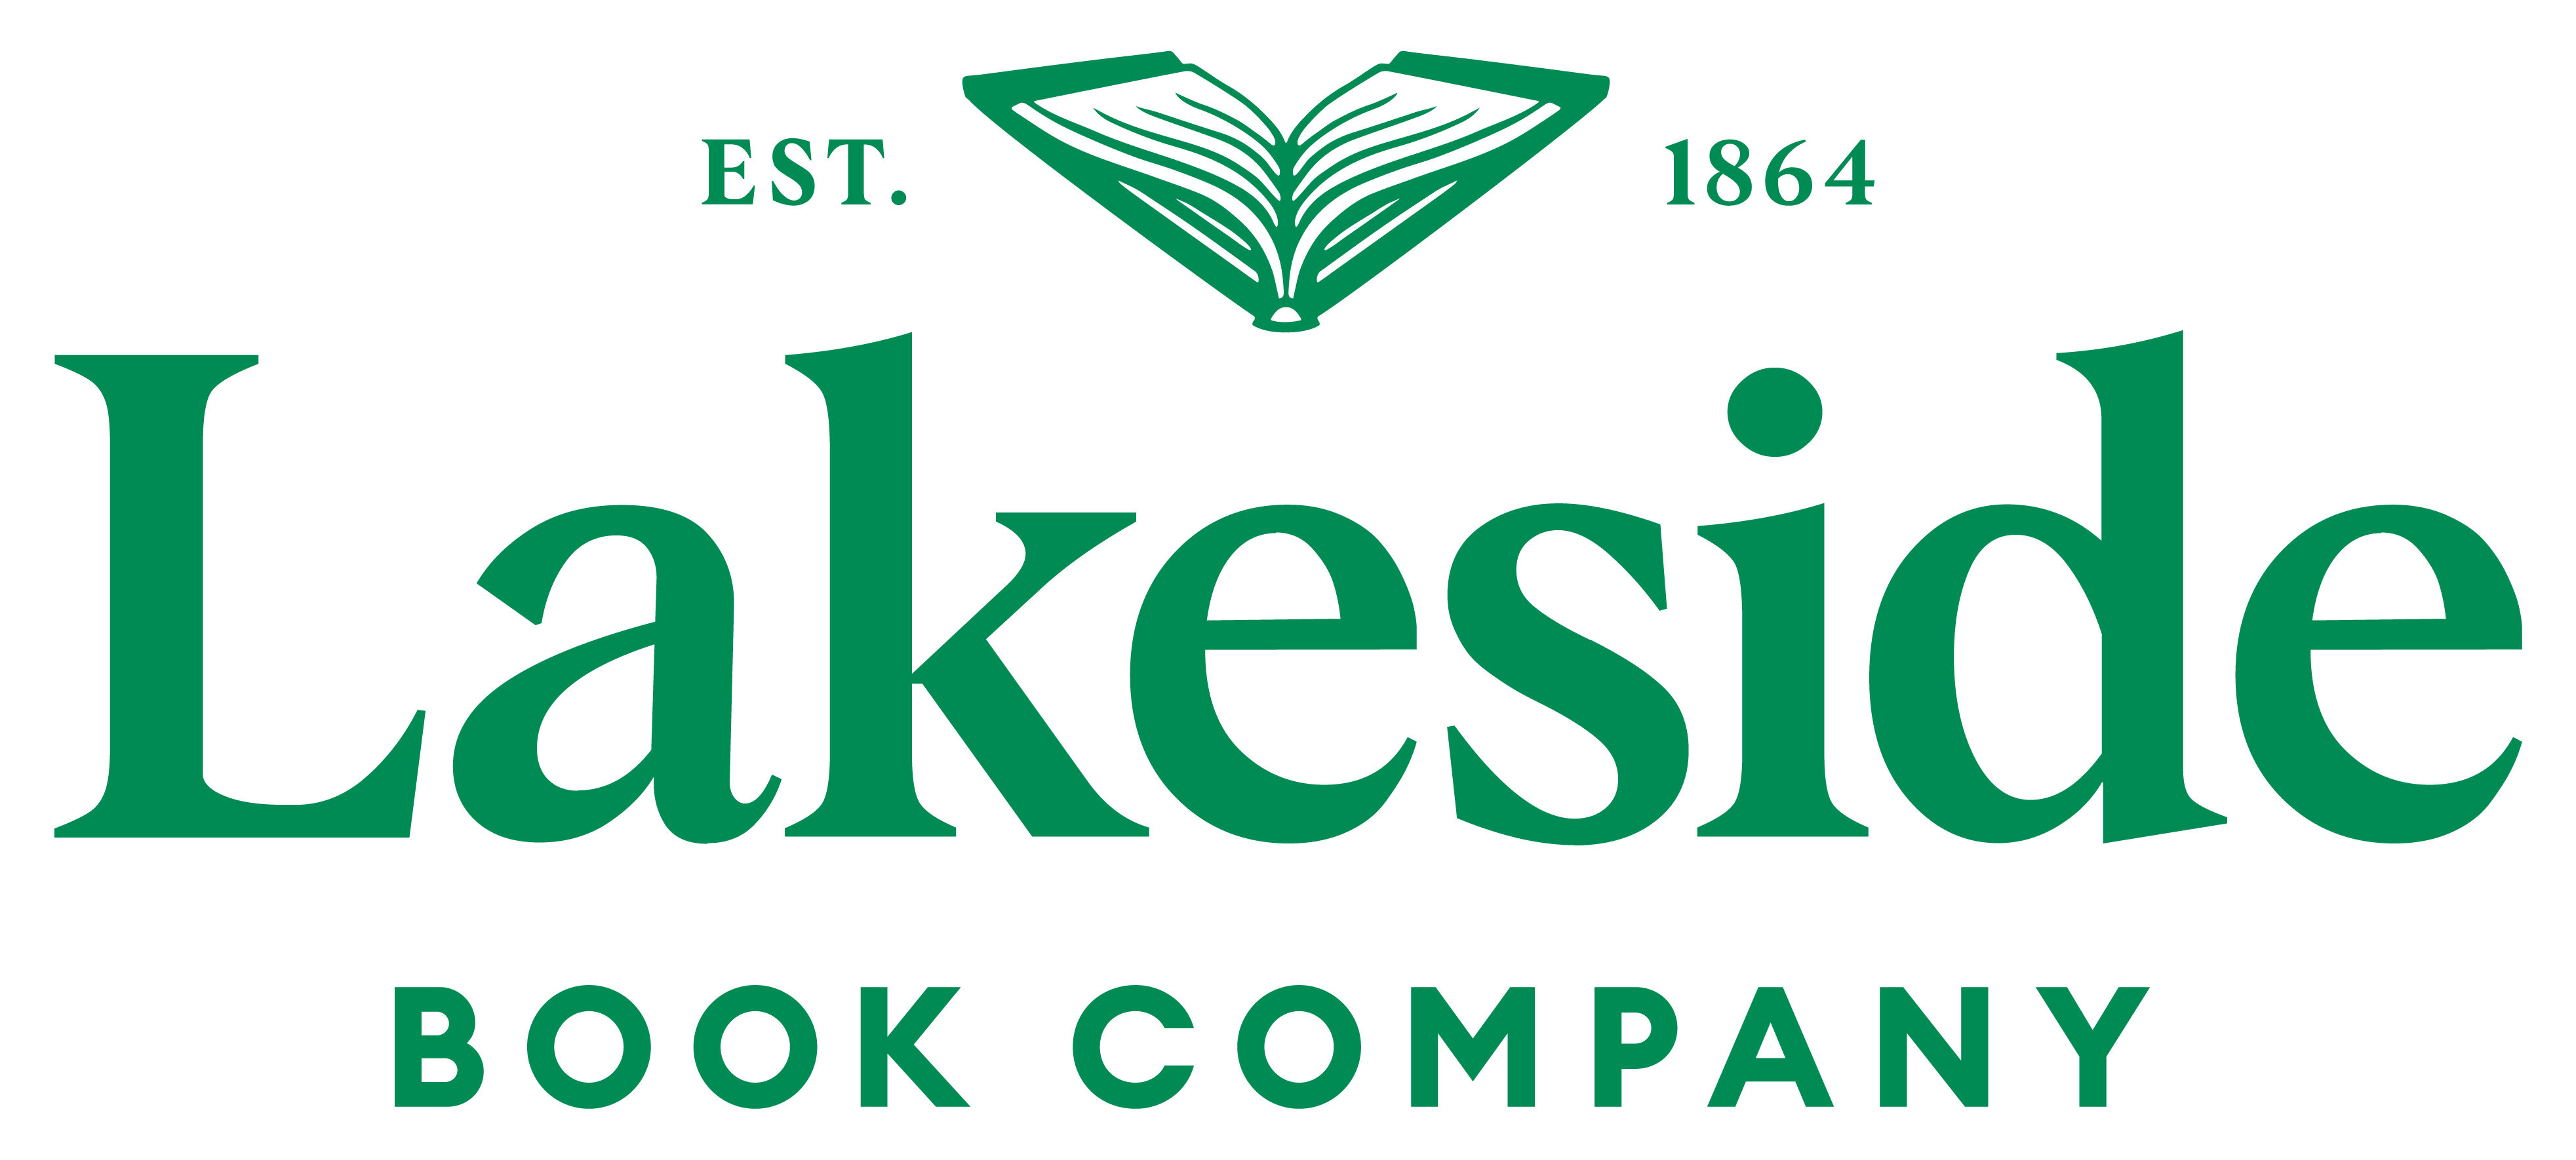 Lakeside Book Company logo